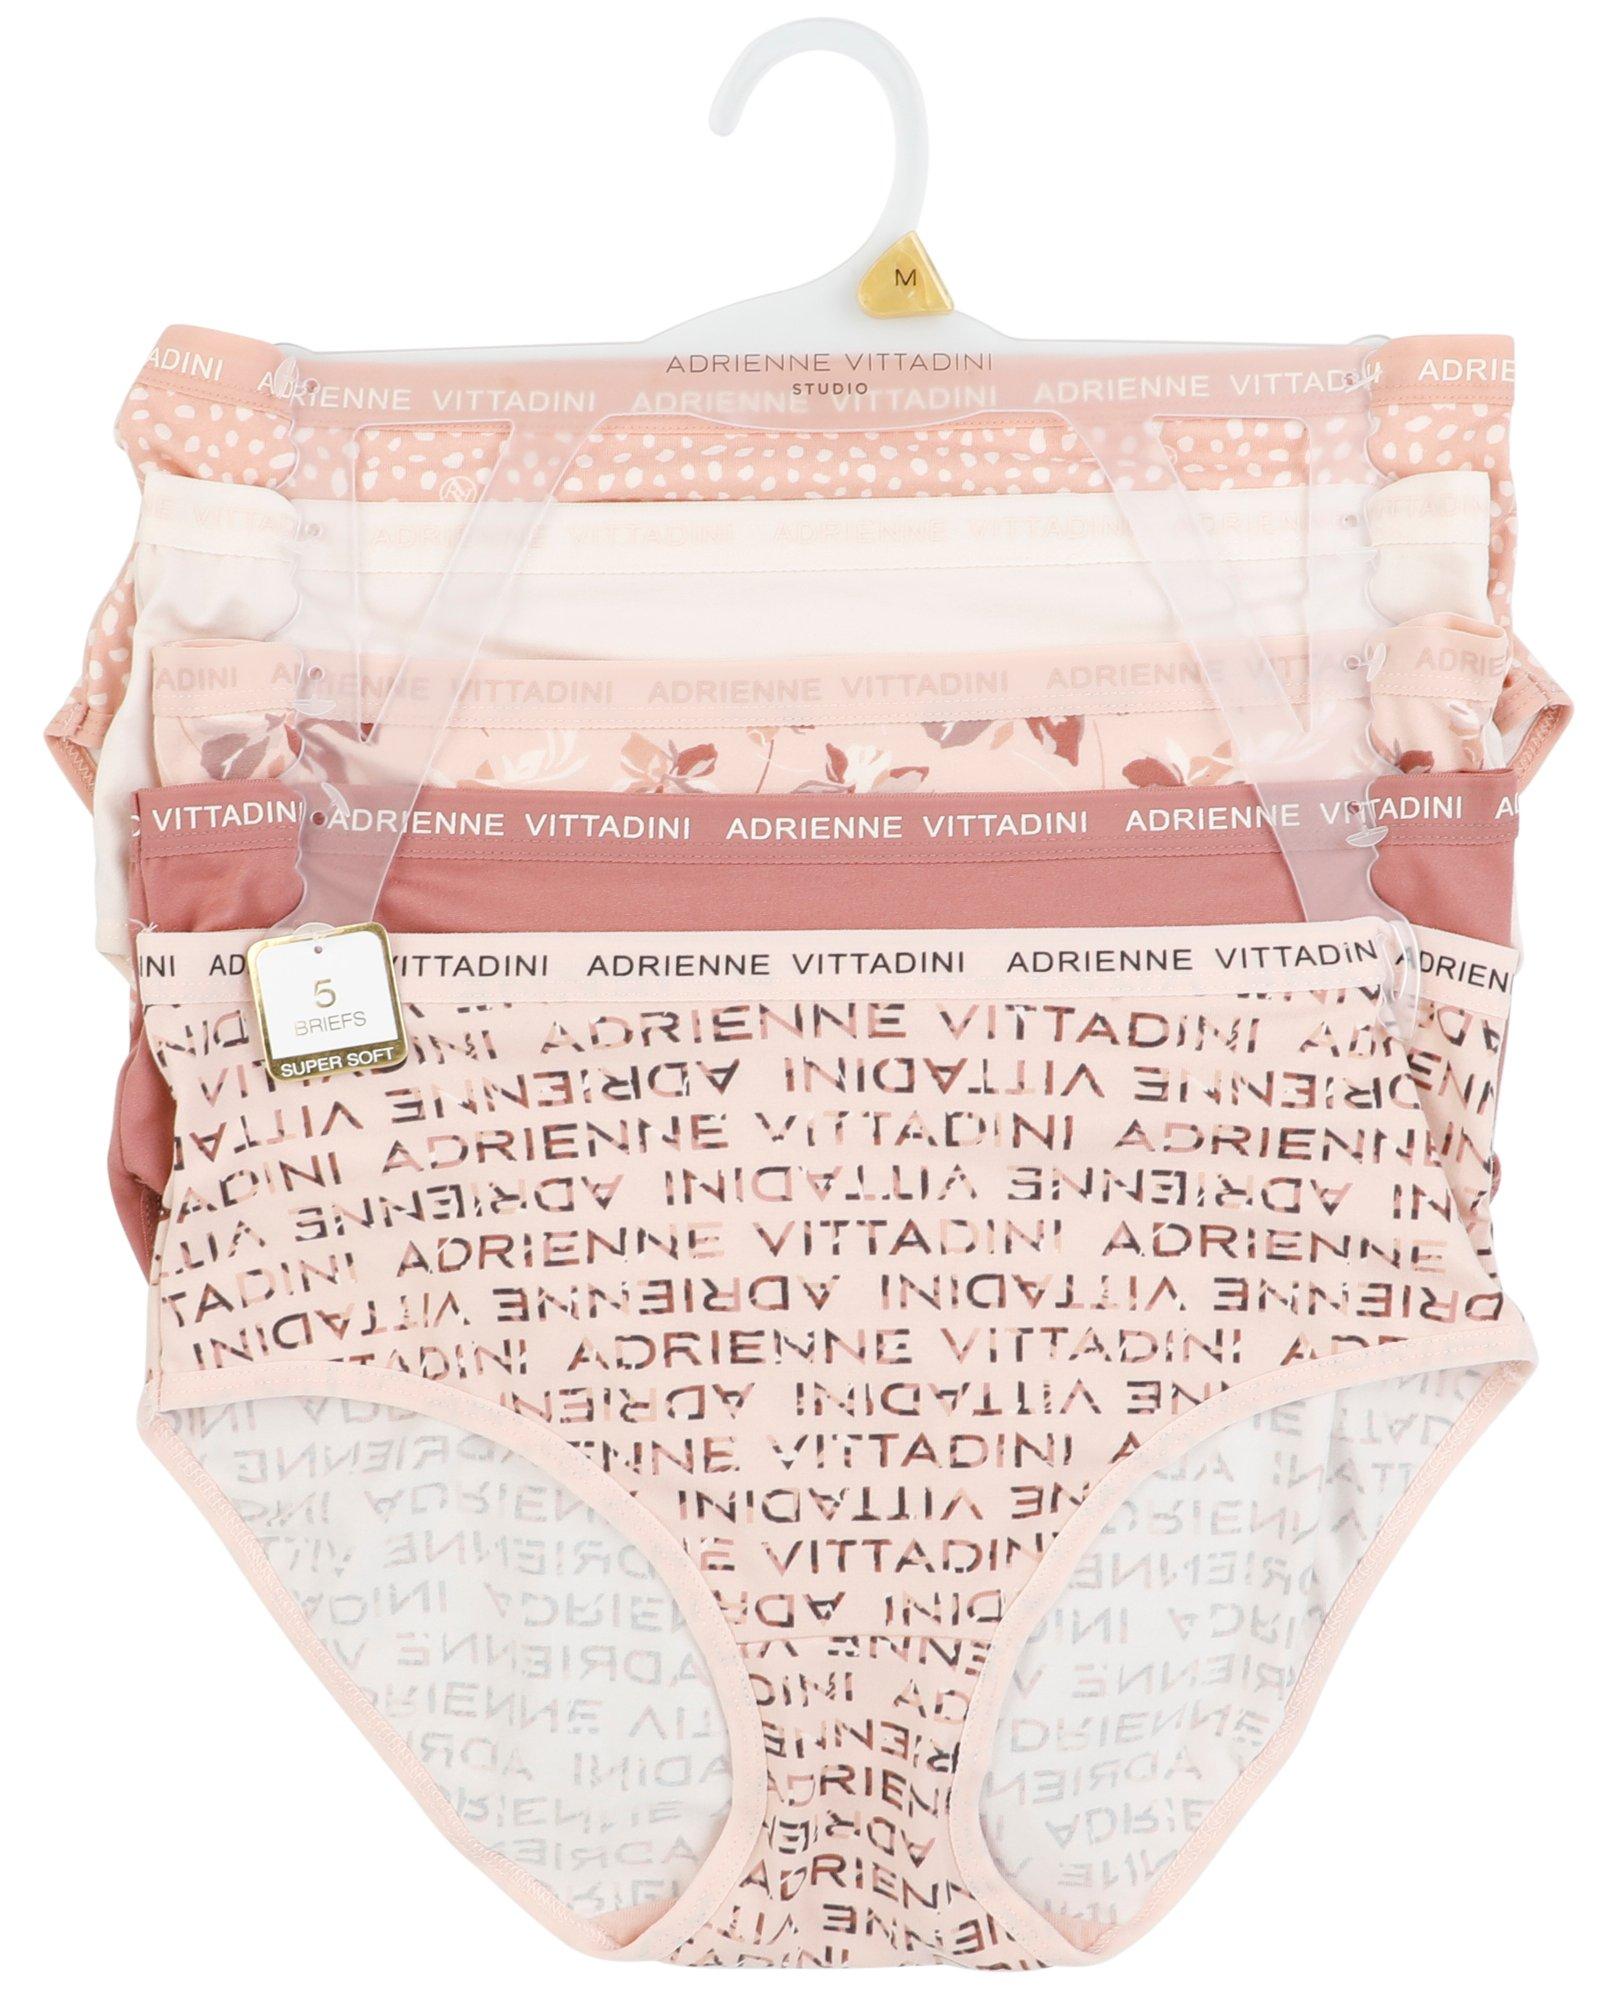 Adrienne Vittadini Underwear Set